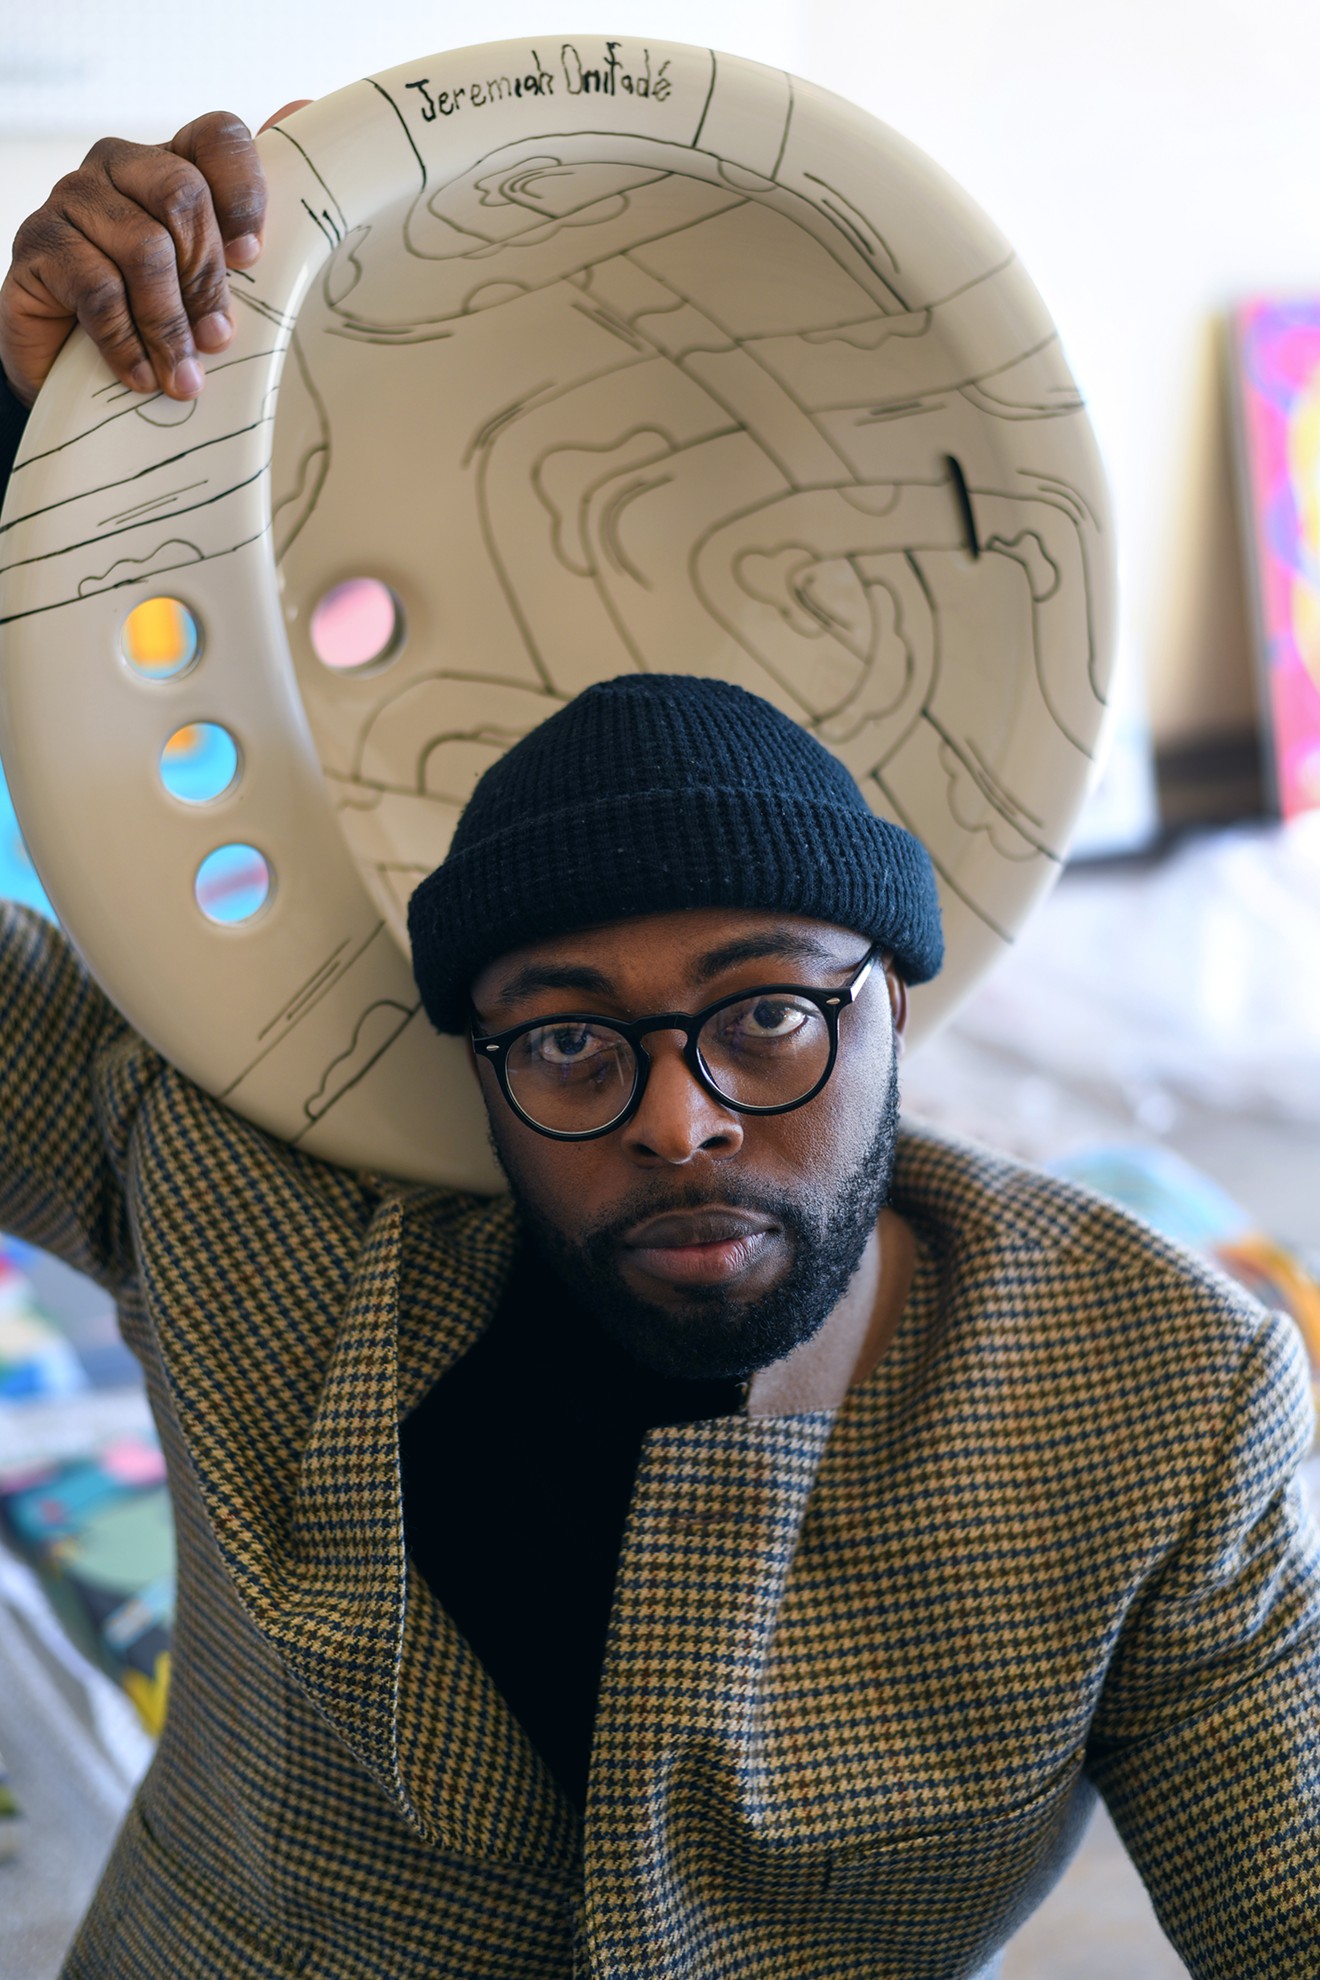 The Nigerian-born artist overcame extraordinary hurdles to put himself through art school.